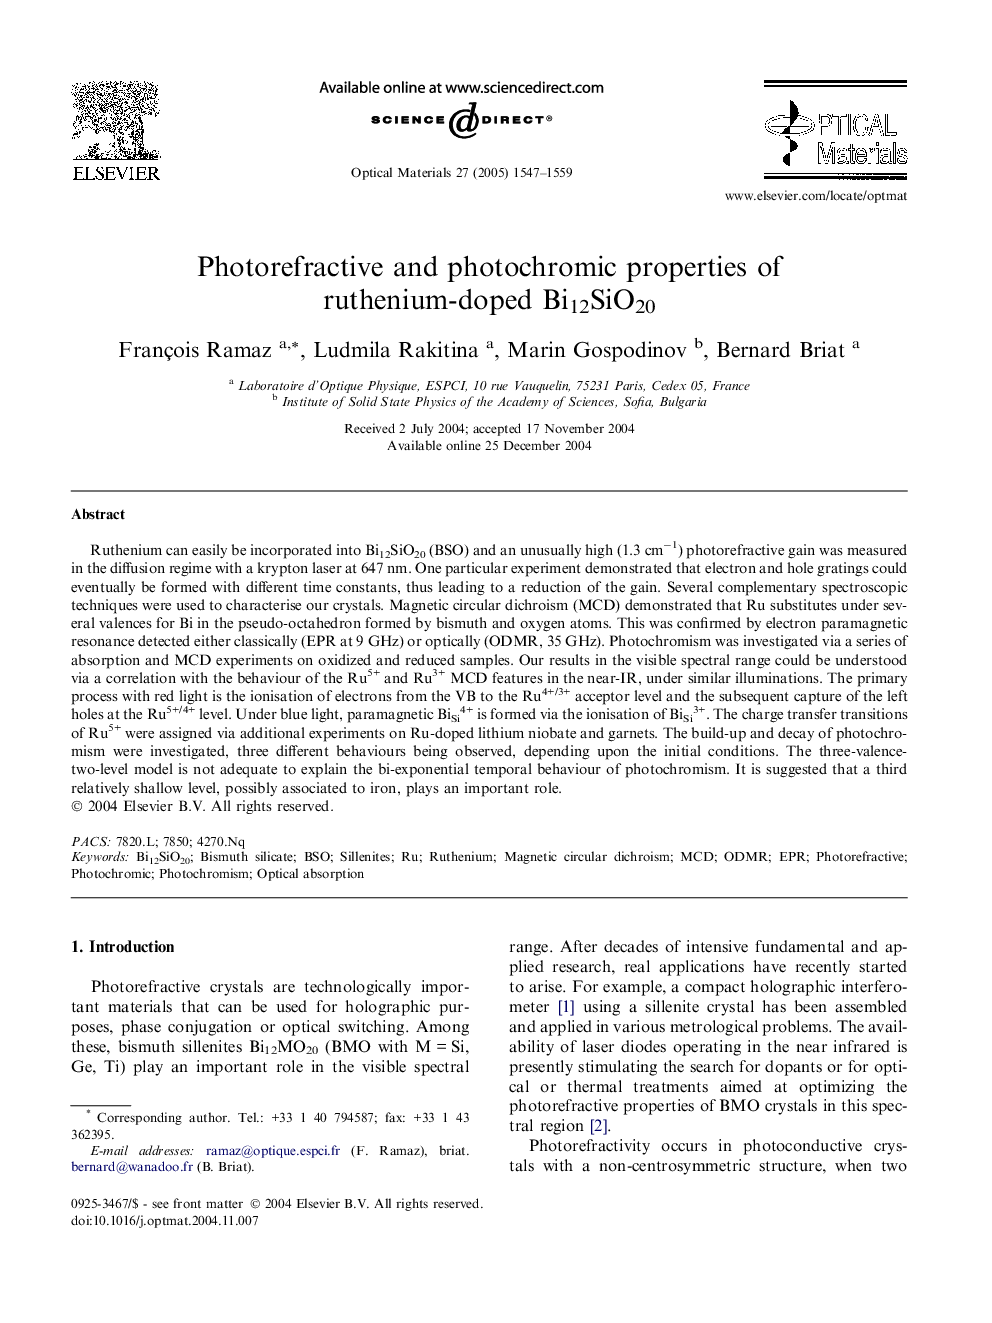 Photorefractive and photochromic properties of ruthenium-doped Bi12SiO20